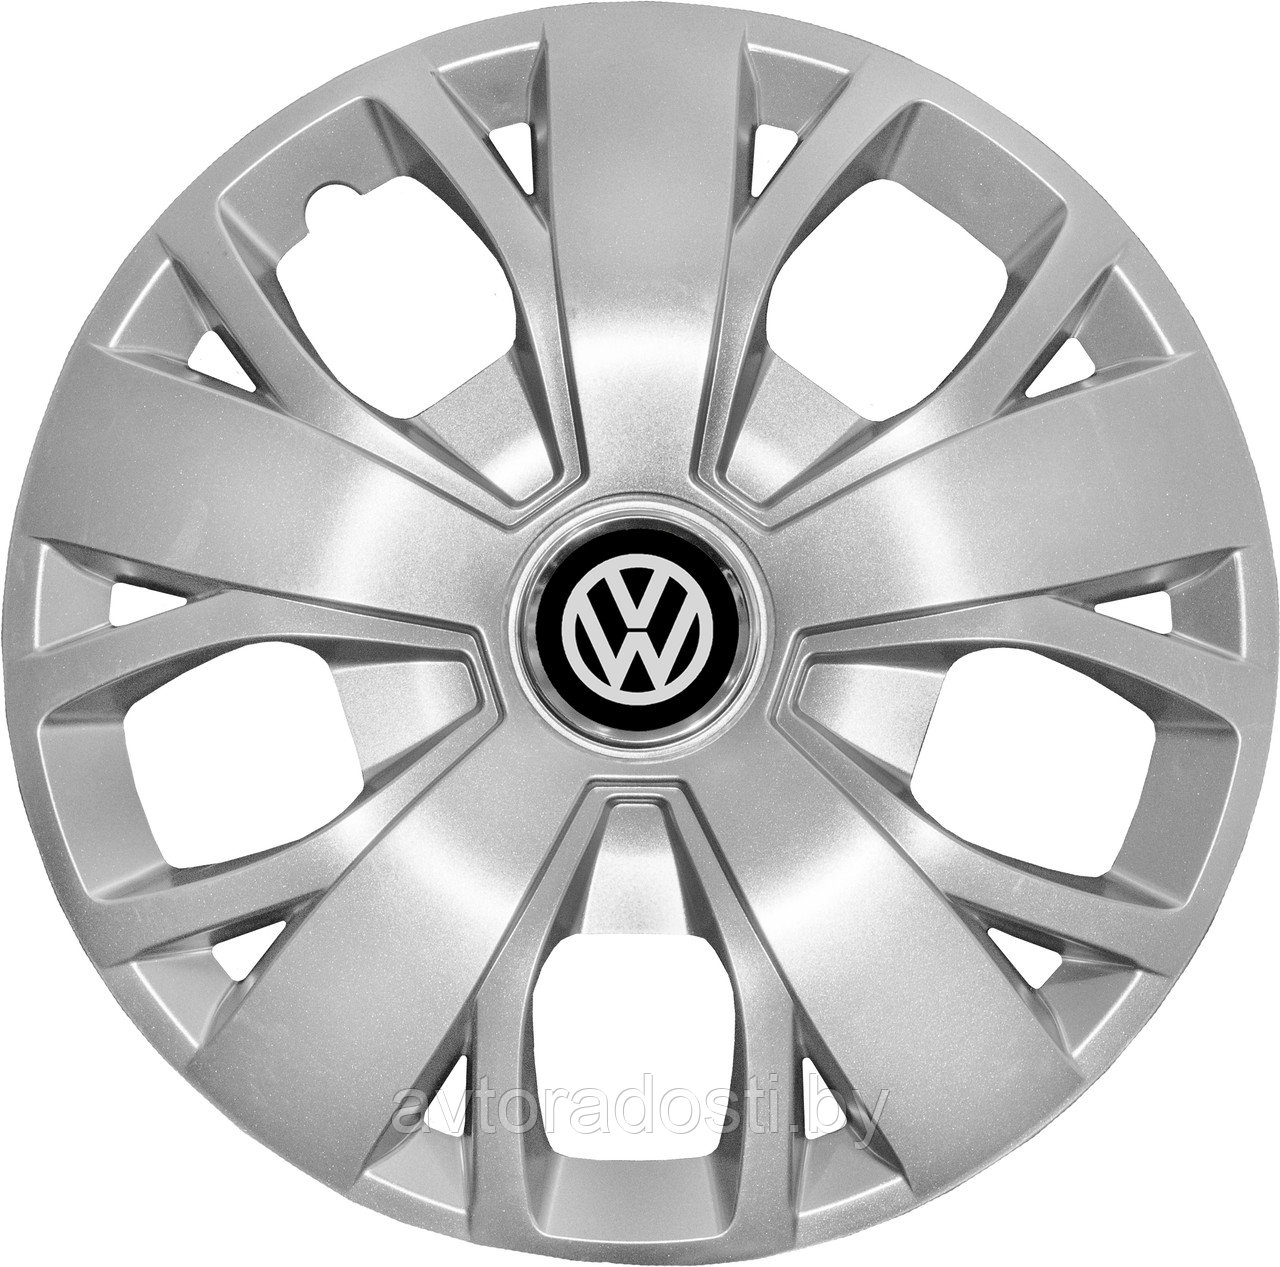 Колпаки на колеса SJS модель 420 / 16"+ комплект значков Volkswagen